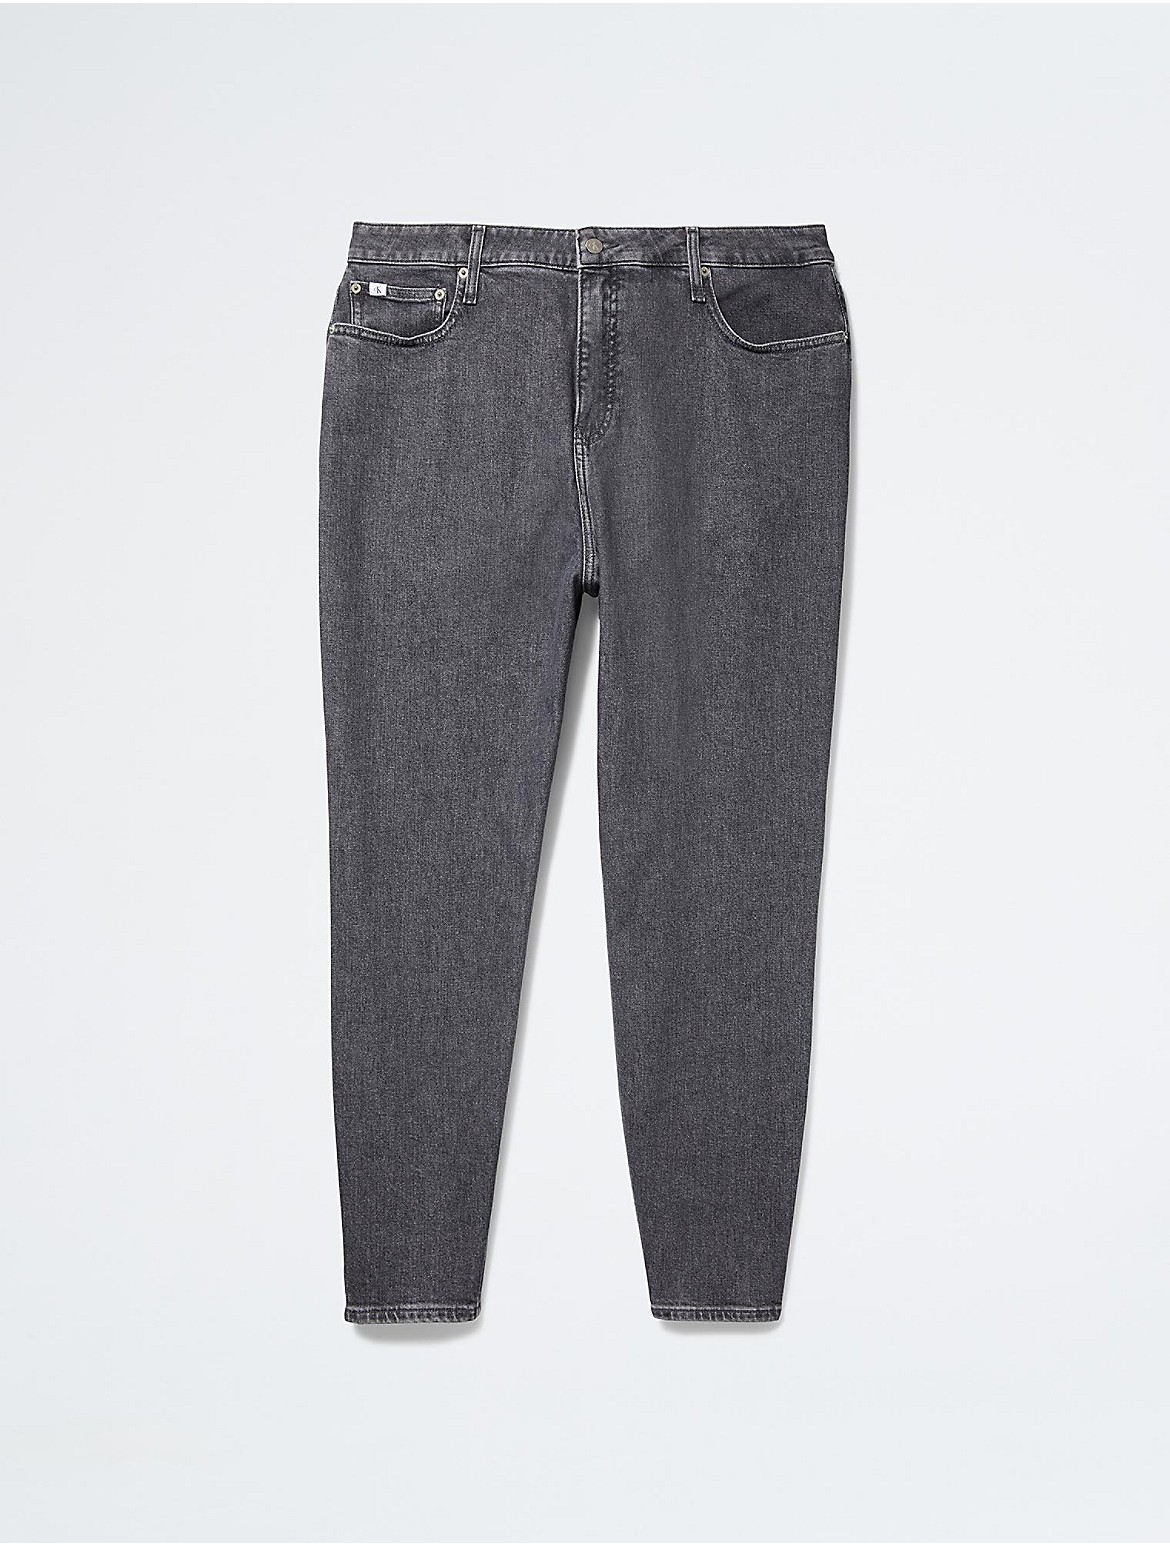 Calvin Klein Women's Plus Size Mom Jeans - Grey - 34